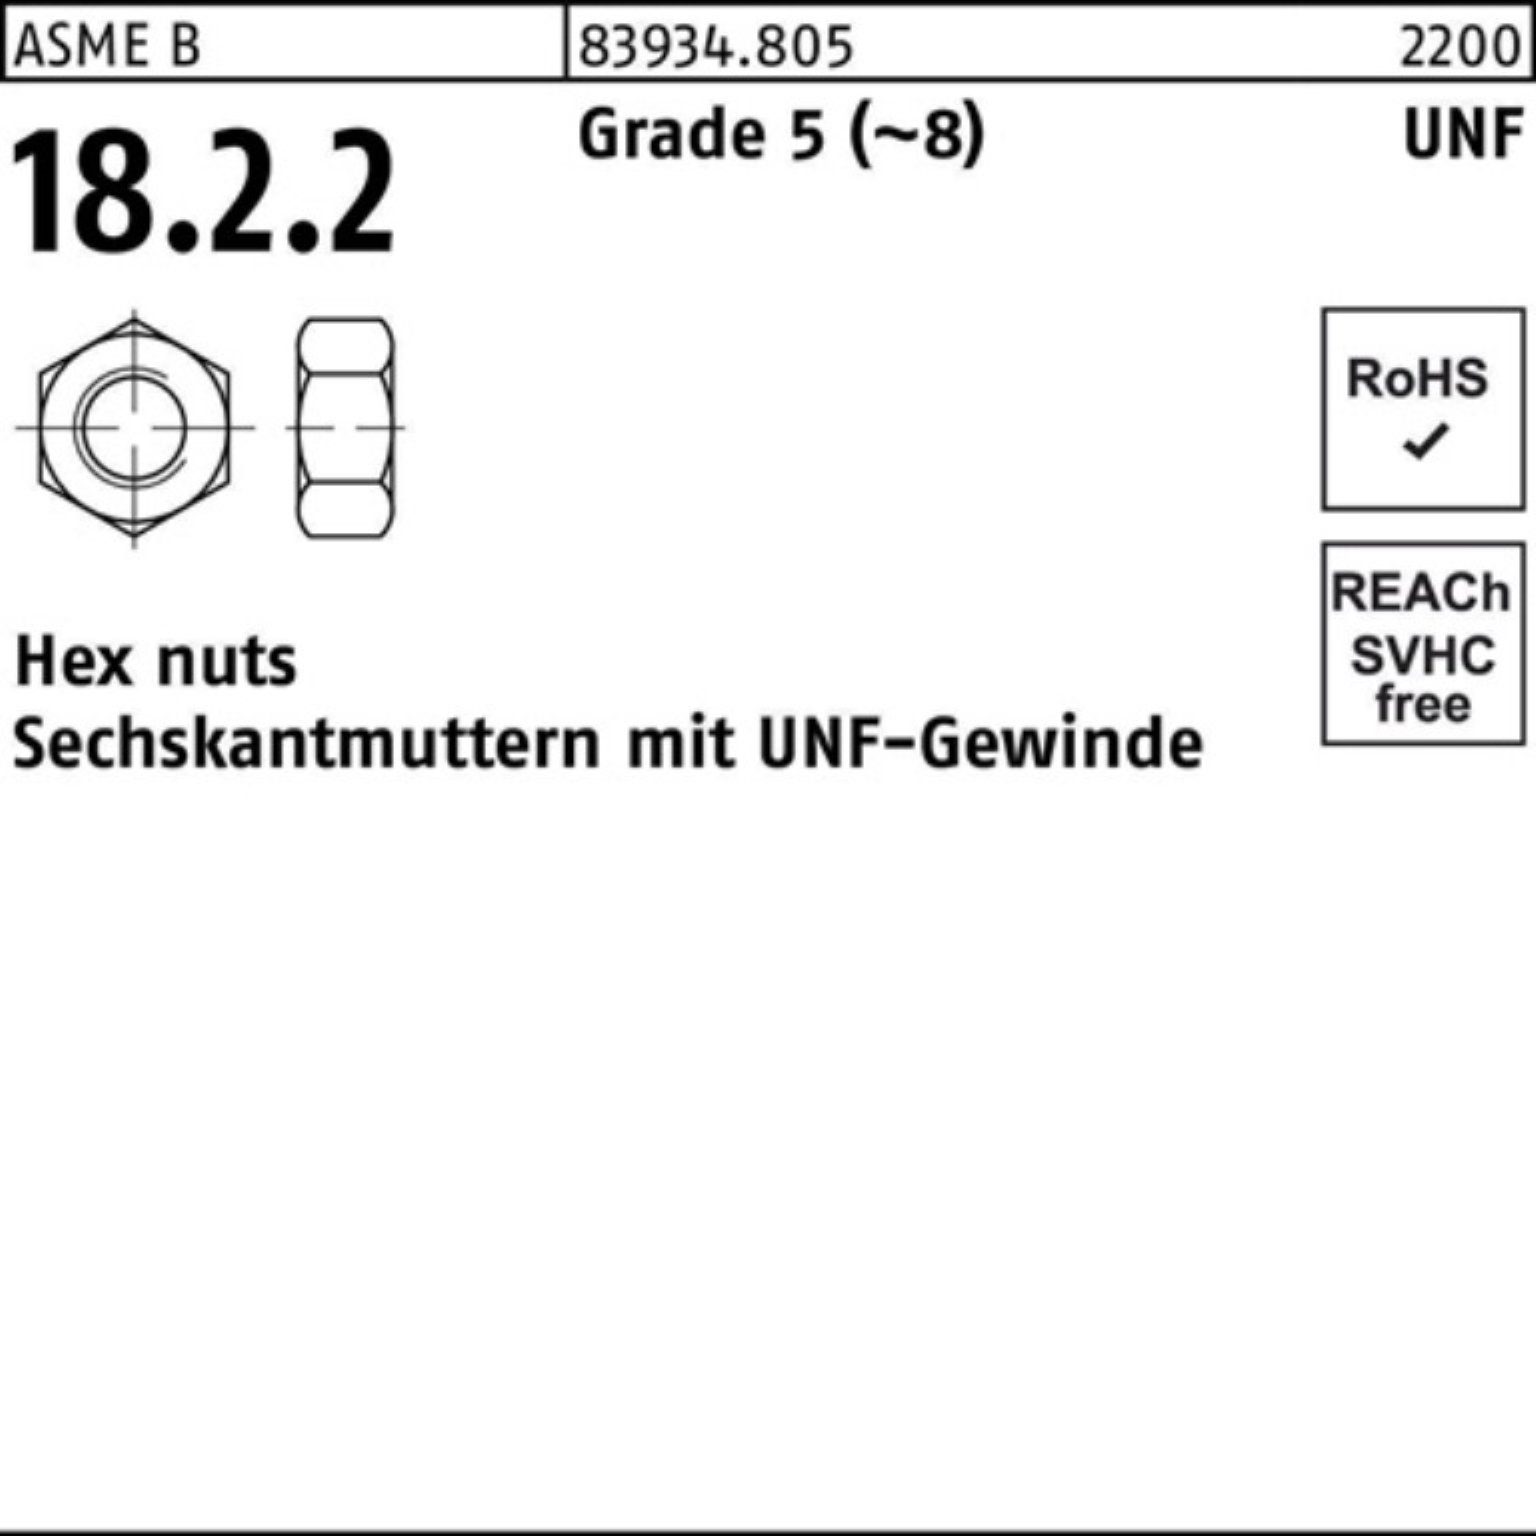 Pack Muttern 1 R 3/4 Reyher Grade 100er St Sechskantmutter 5 83934 (8) UNF-Gewinde 1